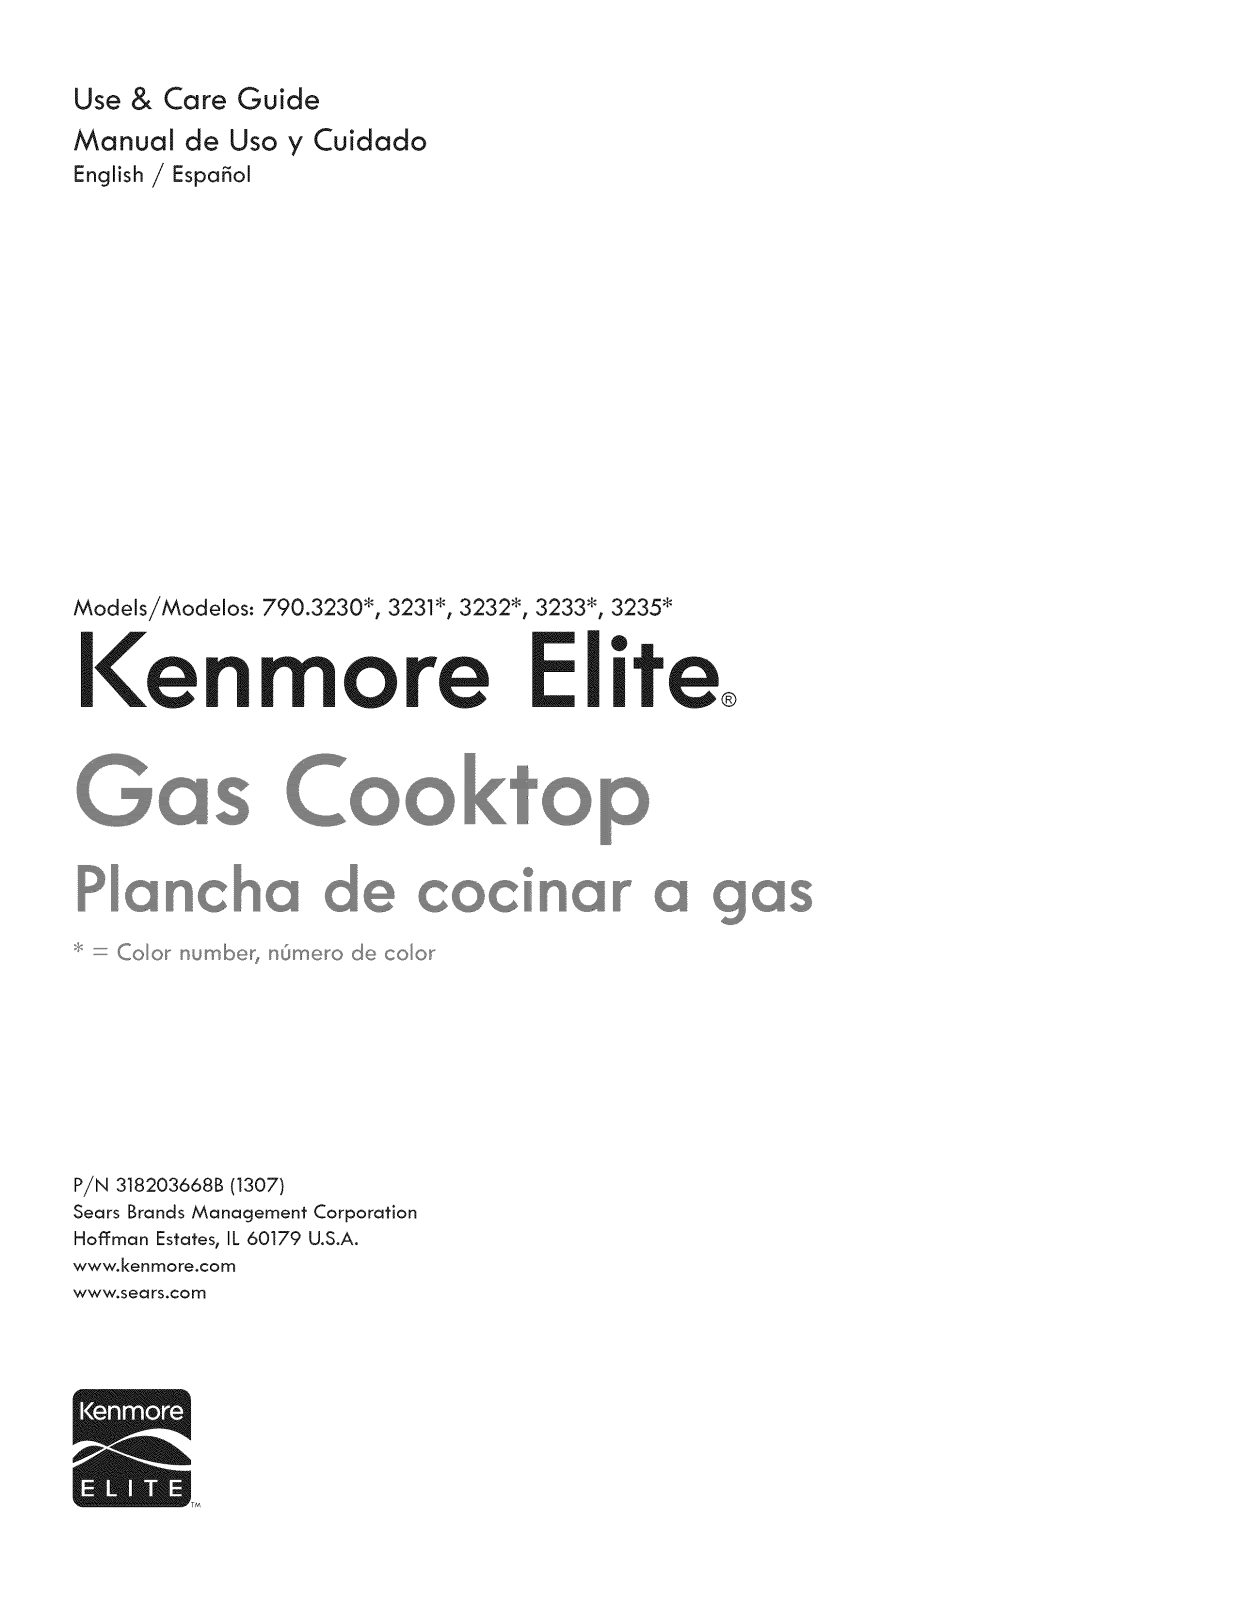 Kenmore Elite 79032313000, 79032319000, 79032323000, 79032329000, 79032333000 Owner’s Manual